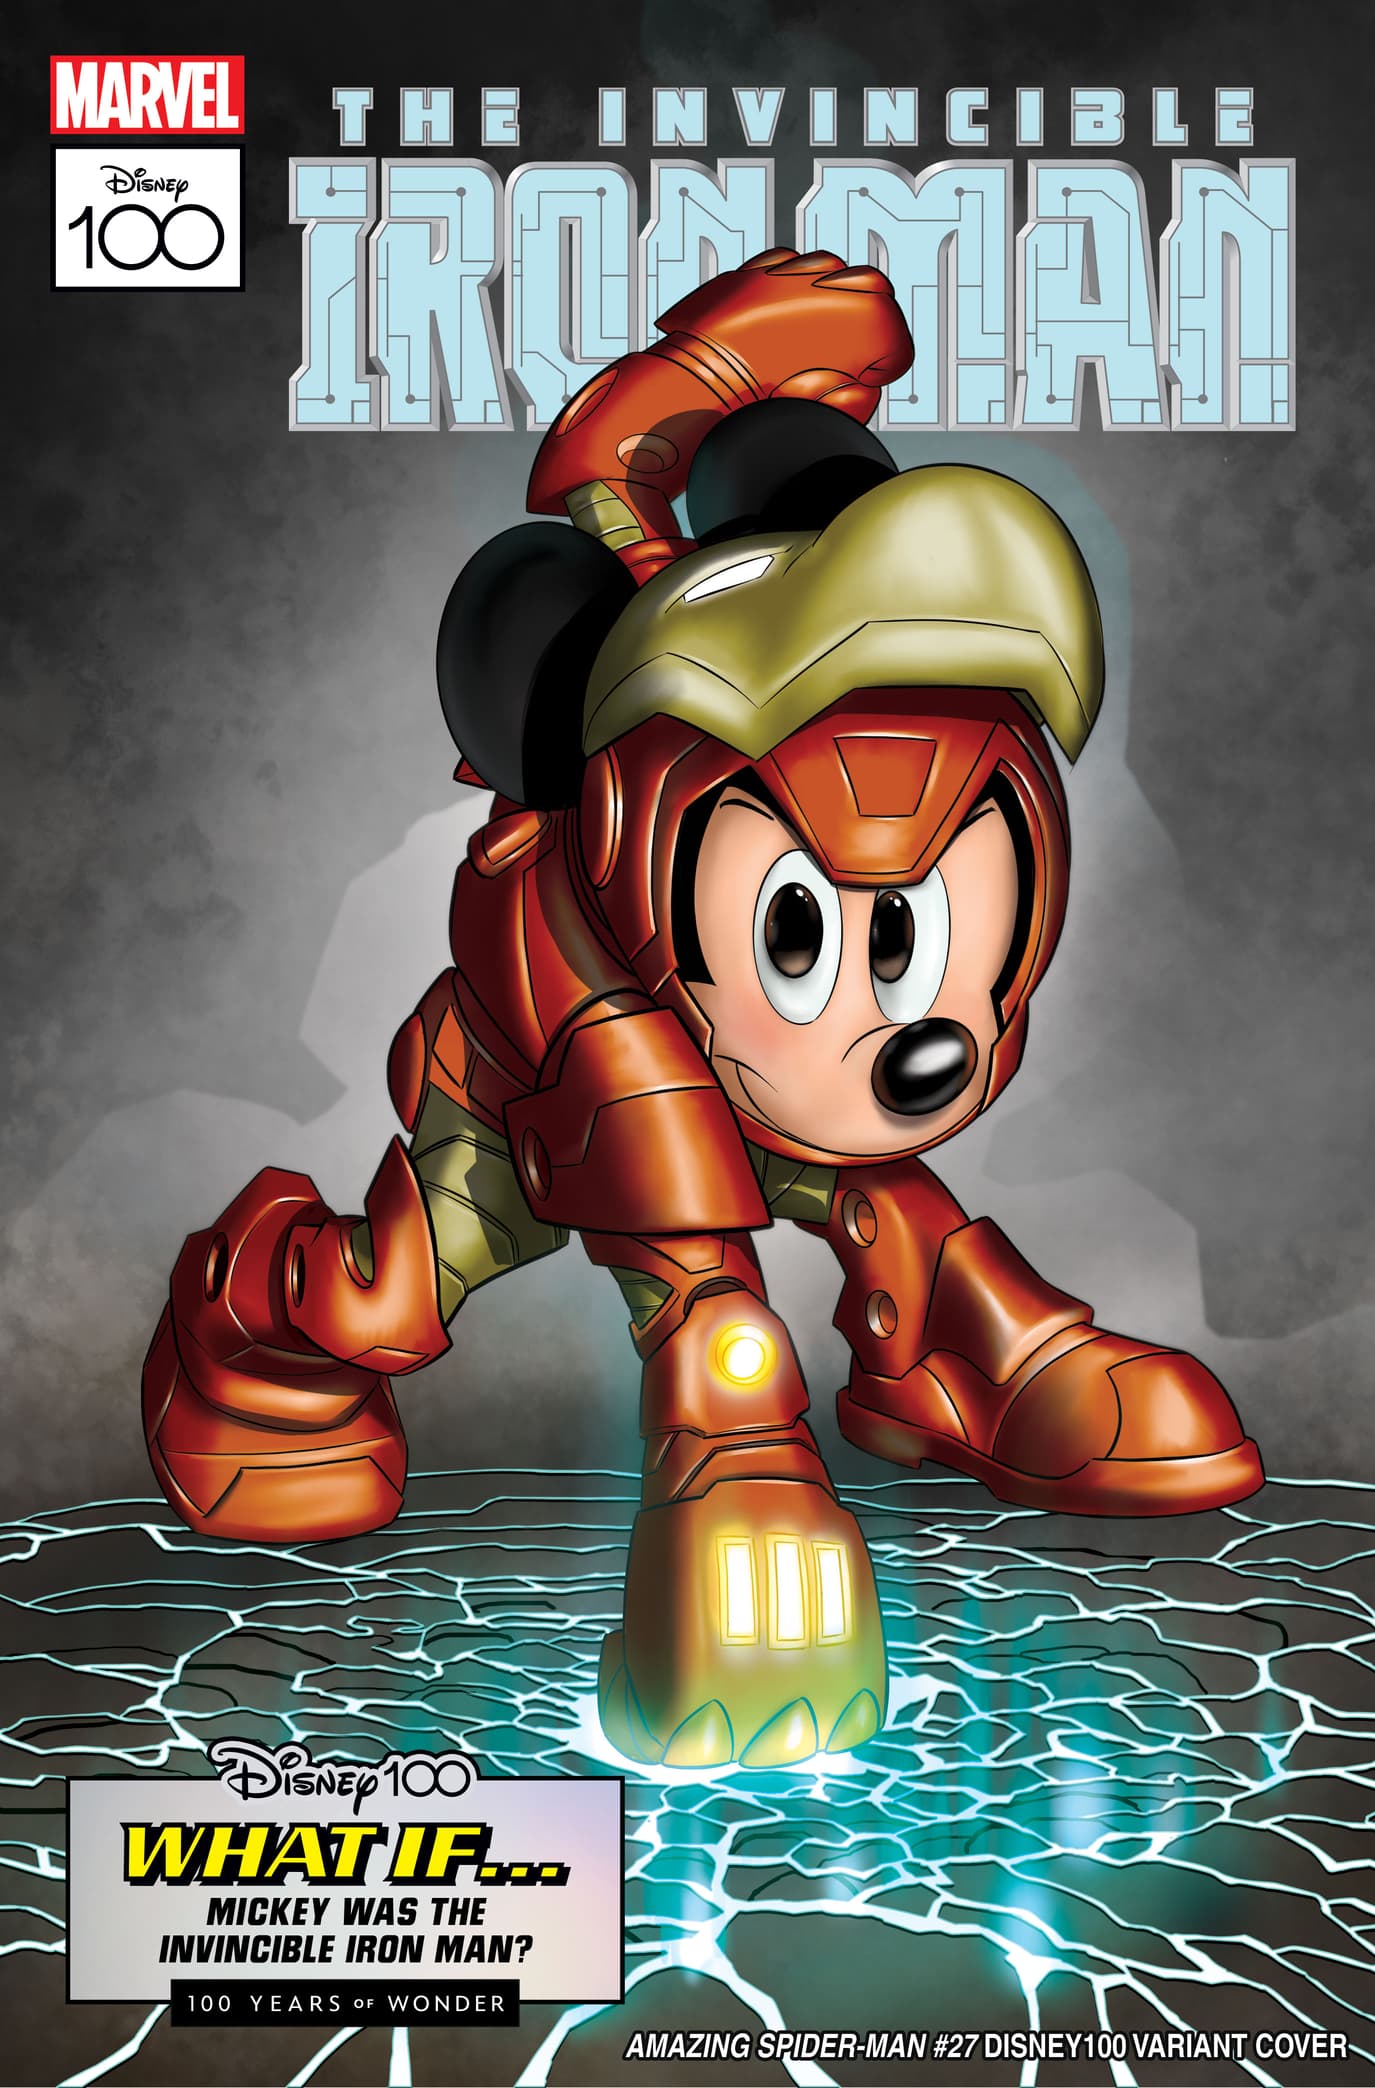 AMAZING SPIDER-MAN #27 Disney100 Variant Cover by Claudio Sciarrone